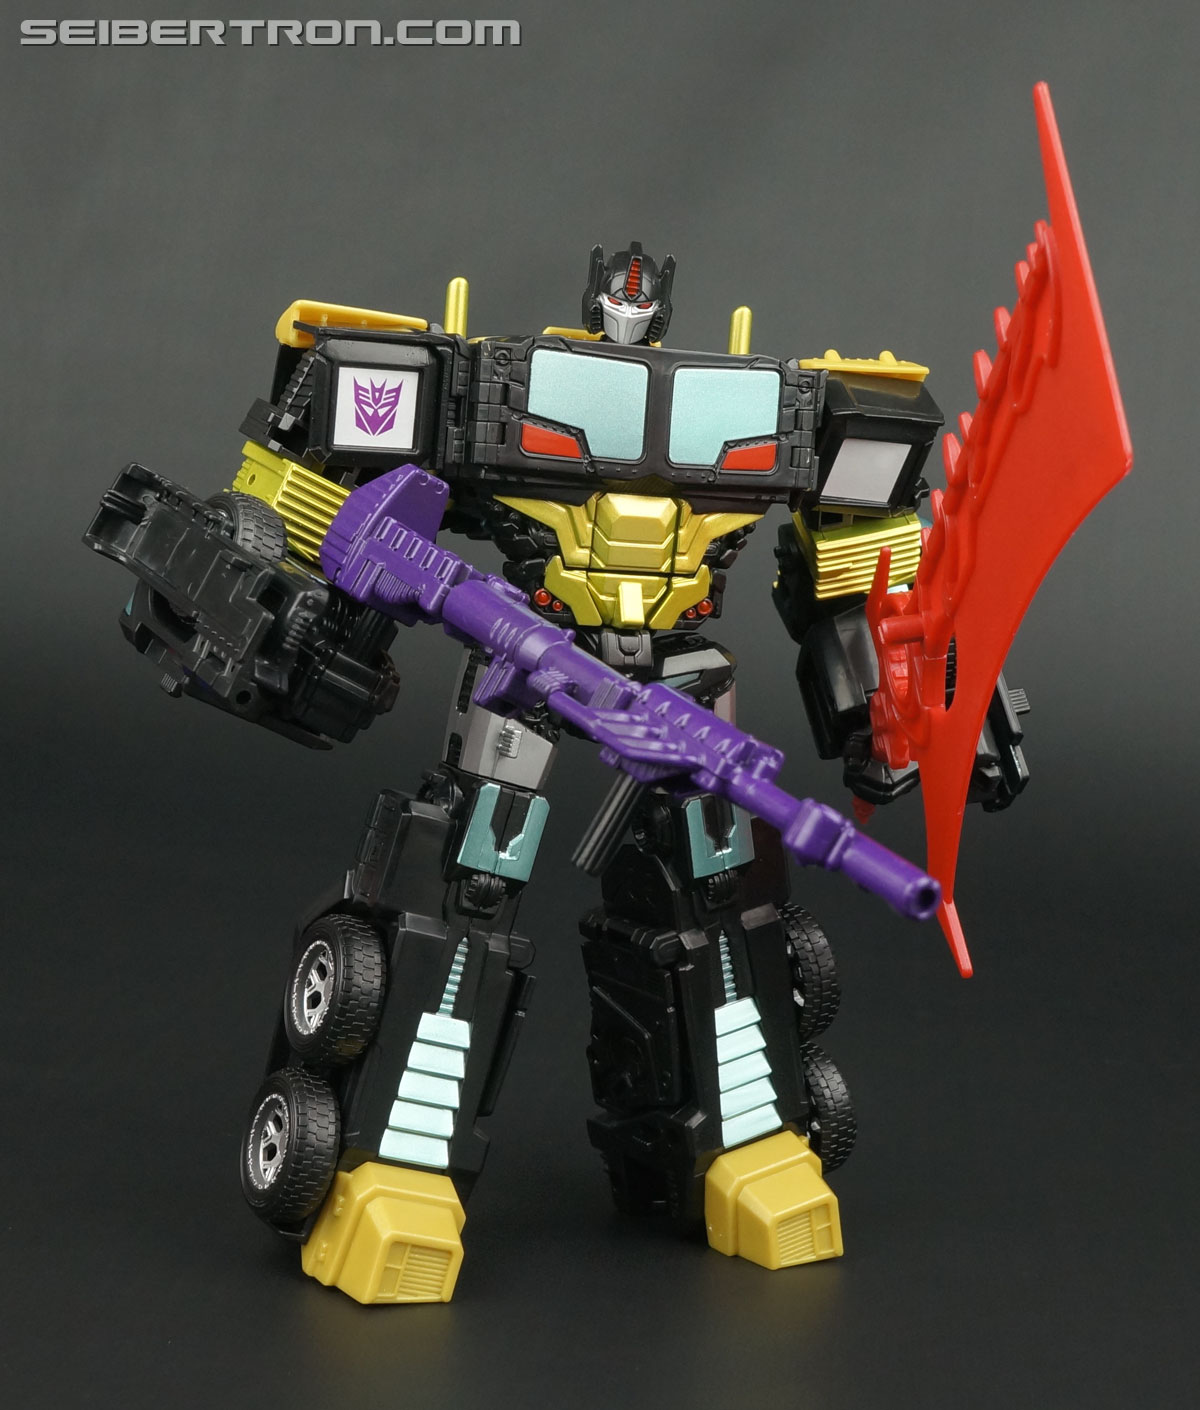 Transformers scourge. Transformers Unite Warriors Grand Scourge. Transformers Unite Warriors. Transformers Гранд Скурдж. Трансформеры Энергон Гранд Скурдж.